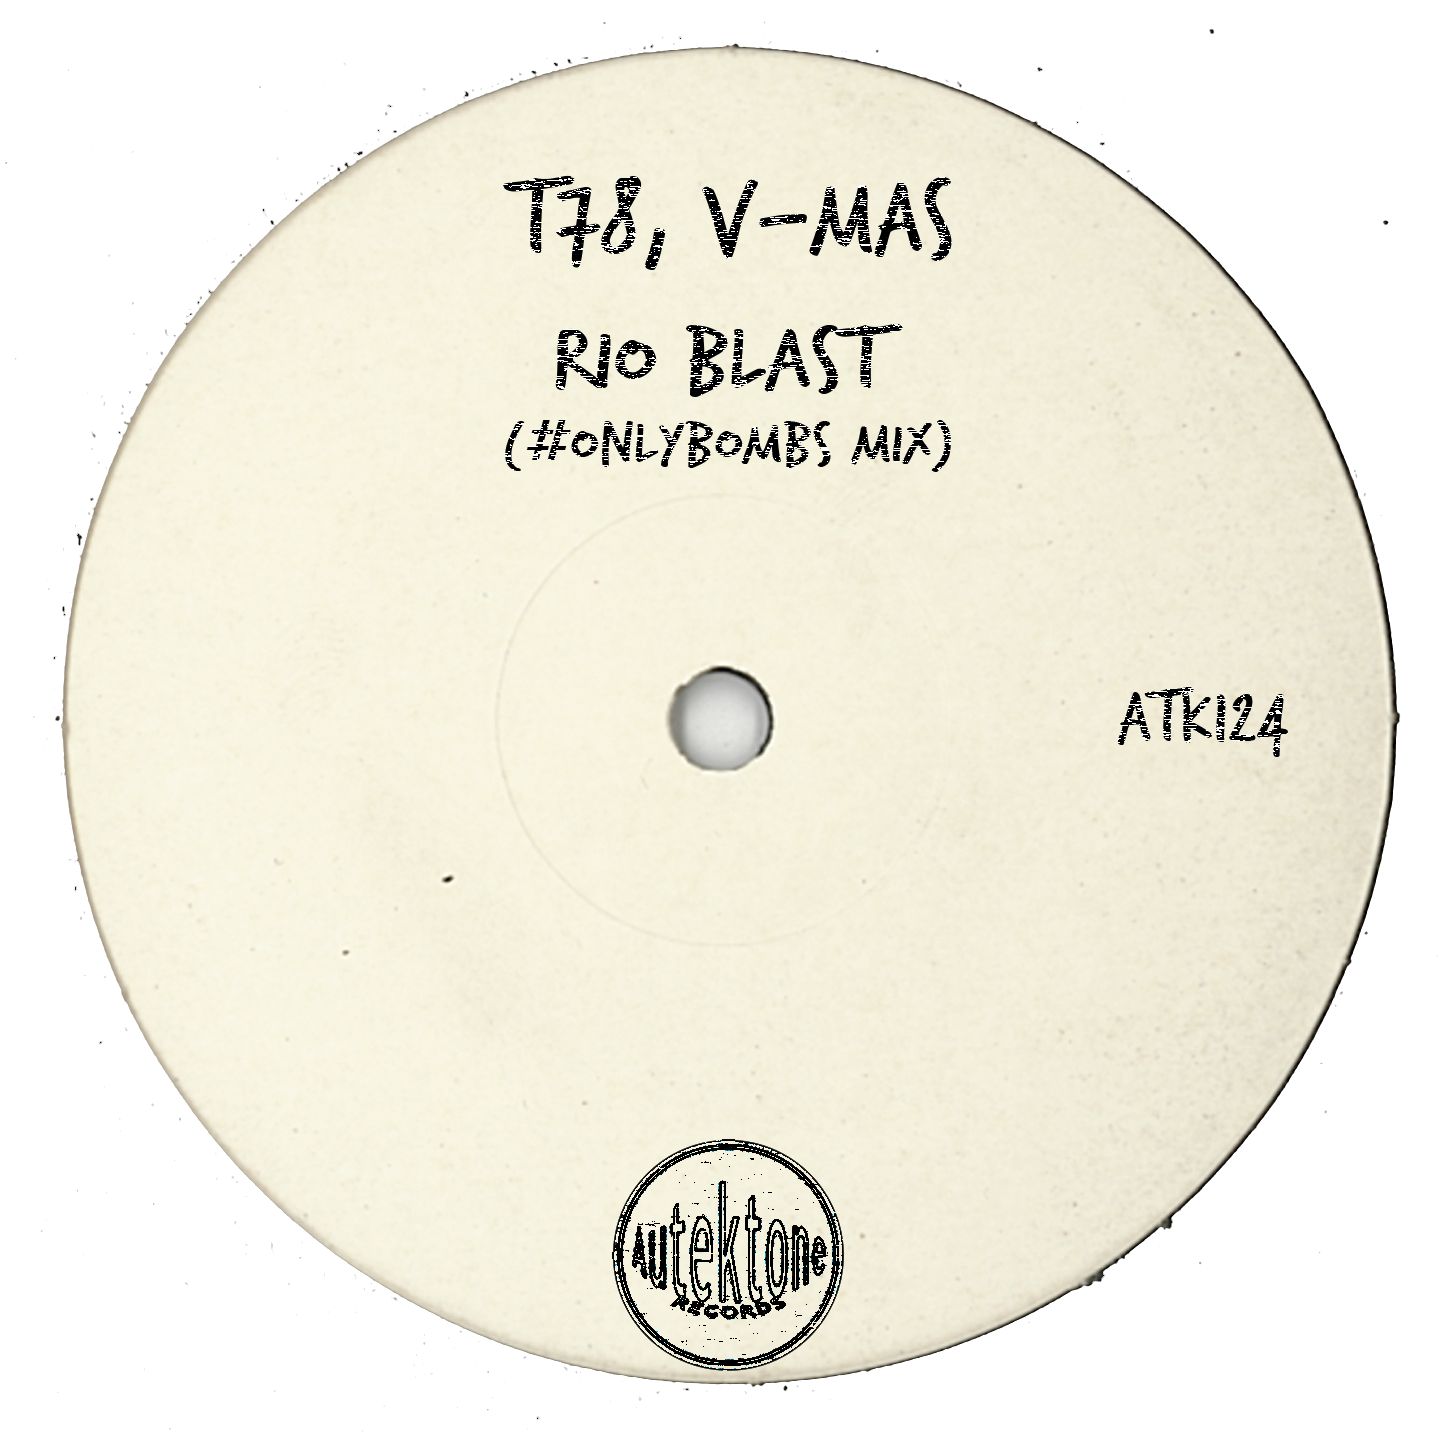 डाउनलोड करा ATK124 - T78, V-Mas "Rio Blast" (#onlybombs Mix)(Preview)(Autektone Records)(Out Now)